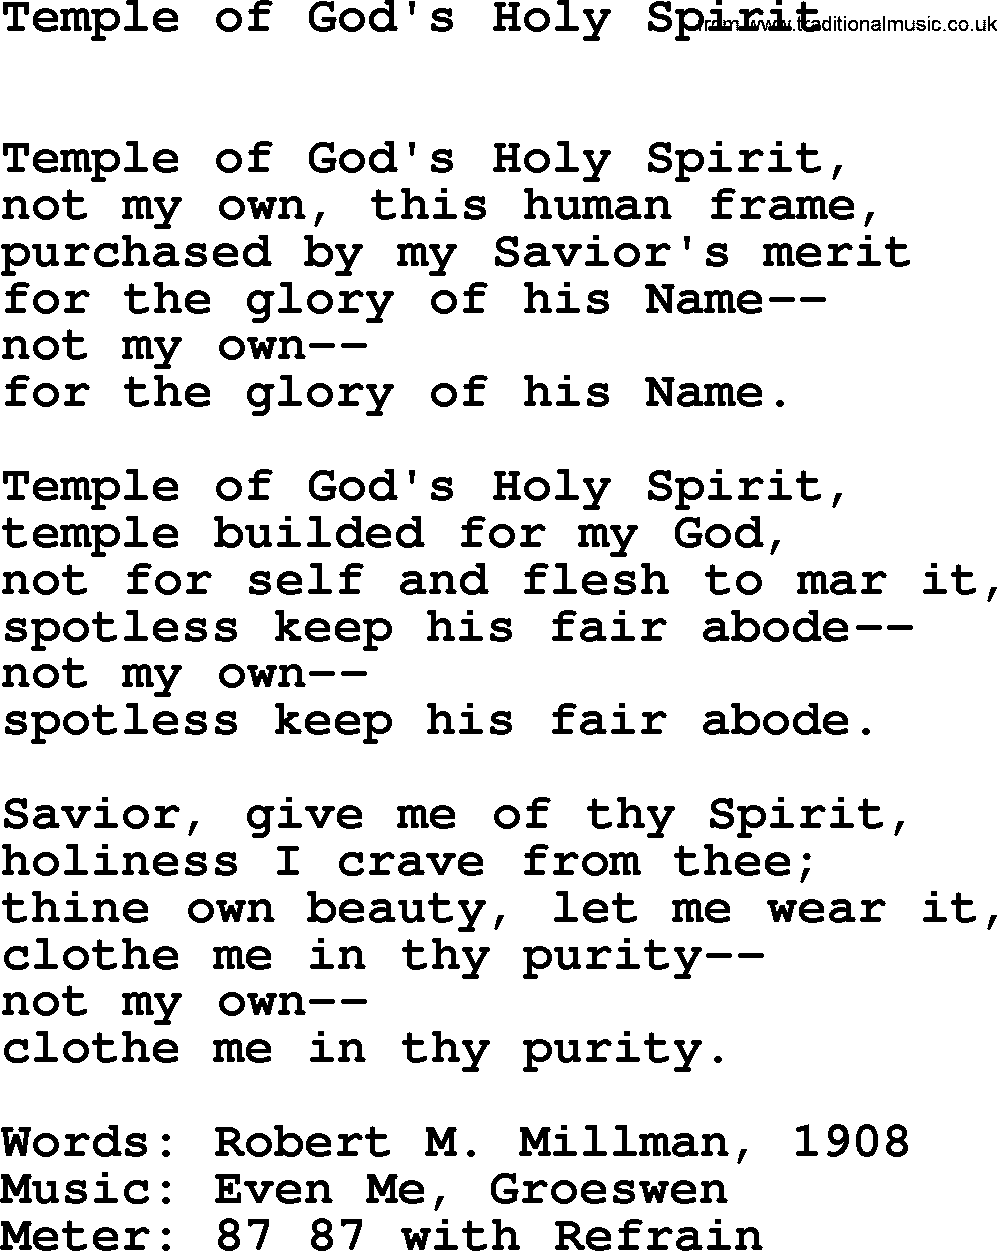 Book of Common Praise Hymn: Temple Of God's Holy Spirit.txt lyrics with midi music